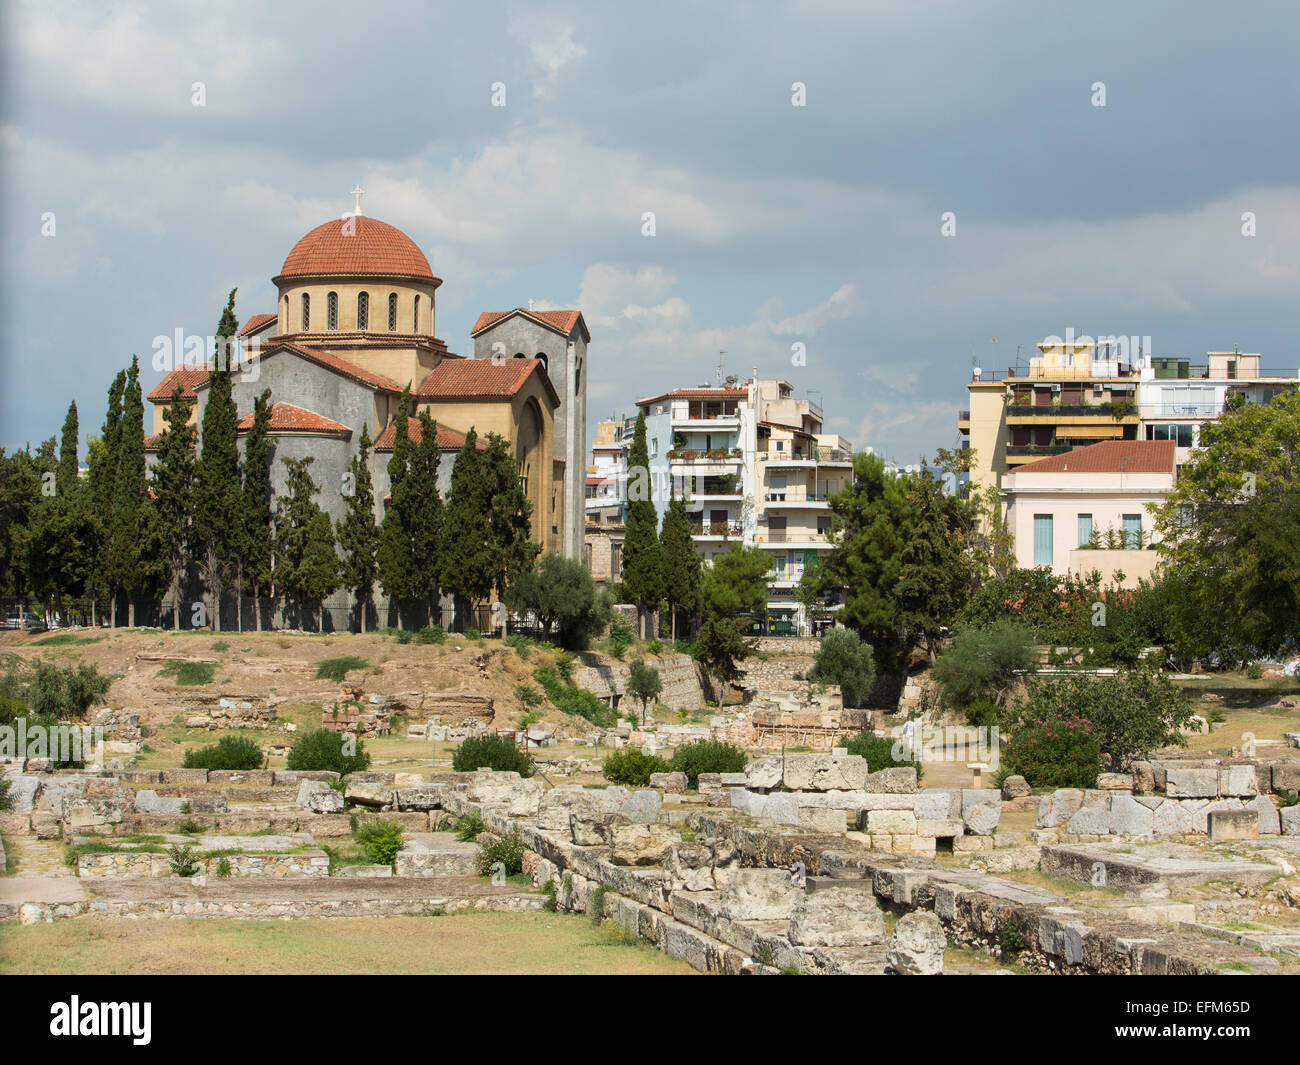 Atenas, Grecia la Iglesia de la Santísima Trinidad cementerio Keramikos. Foto de stock